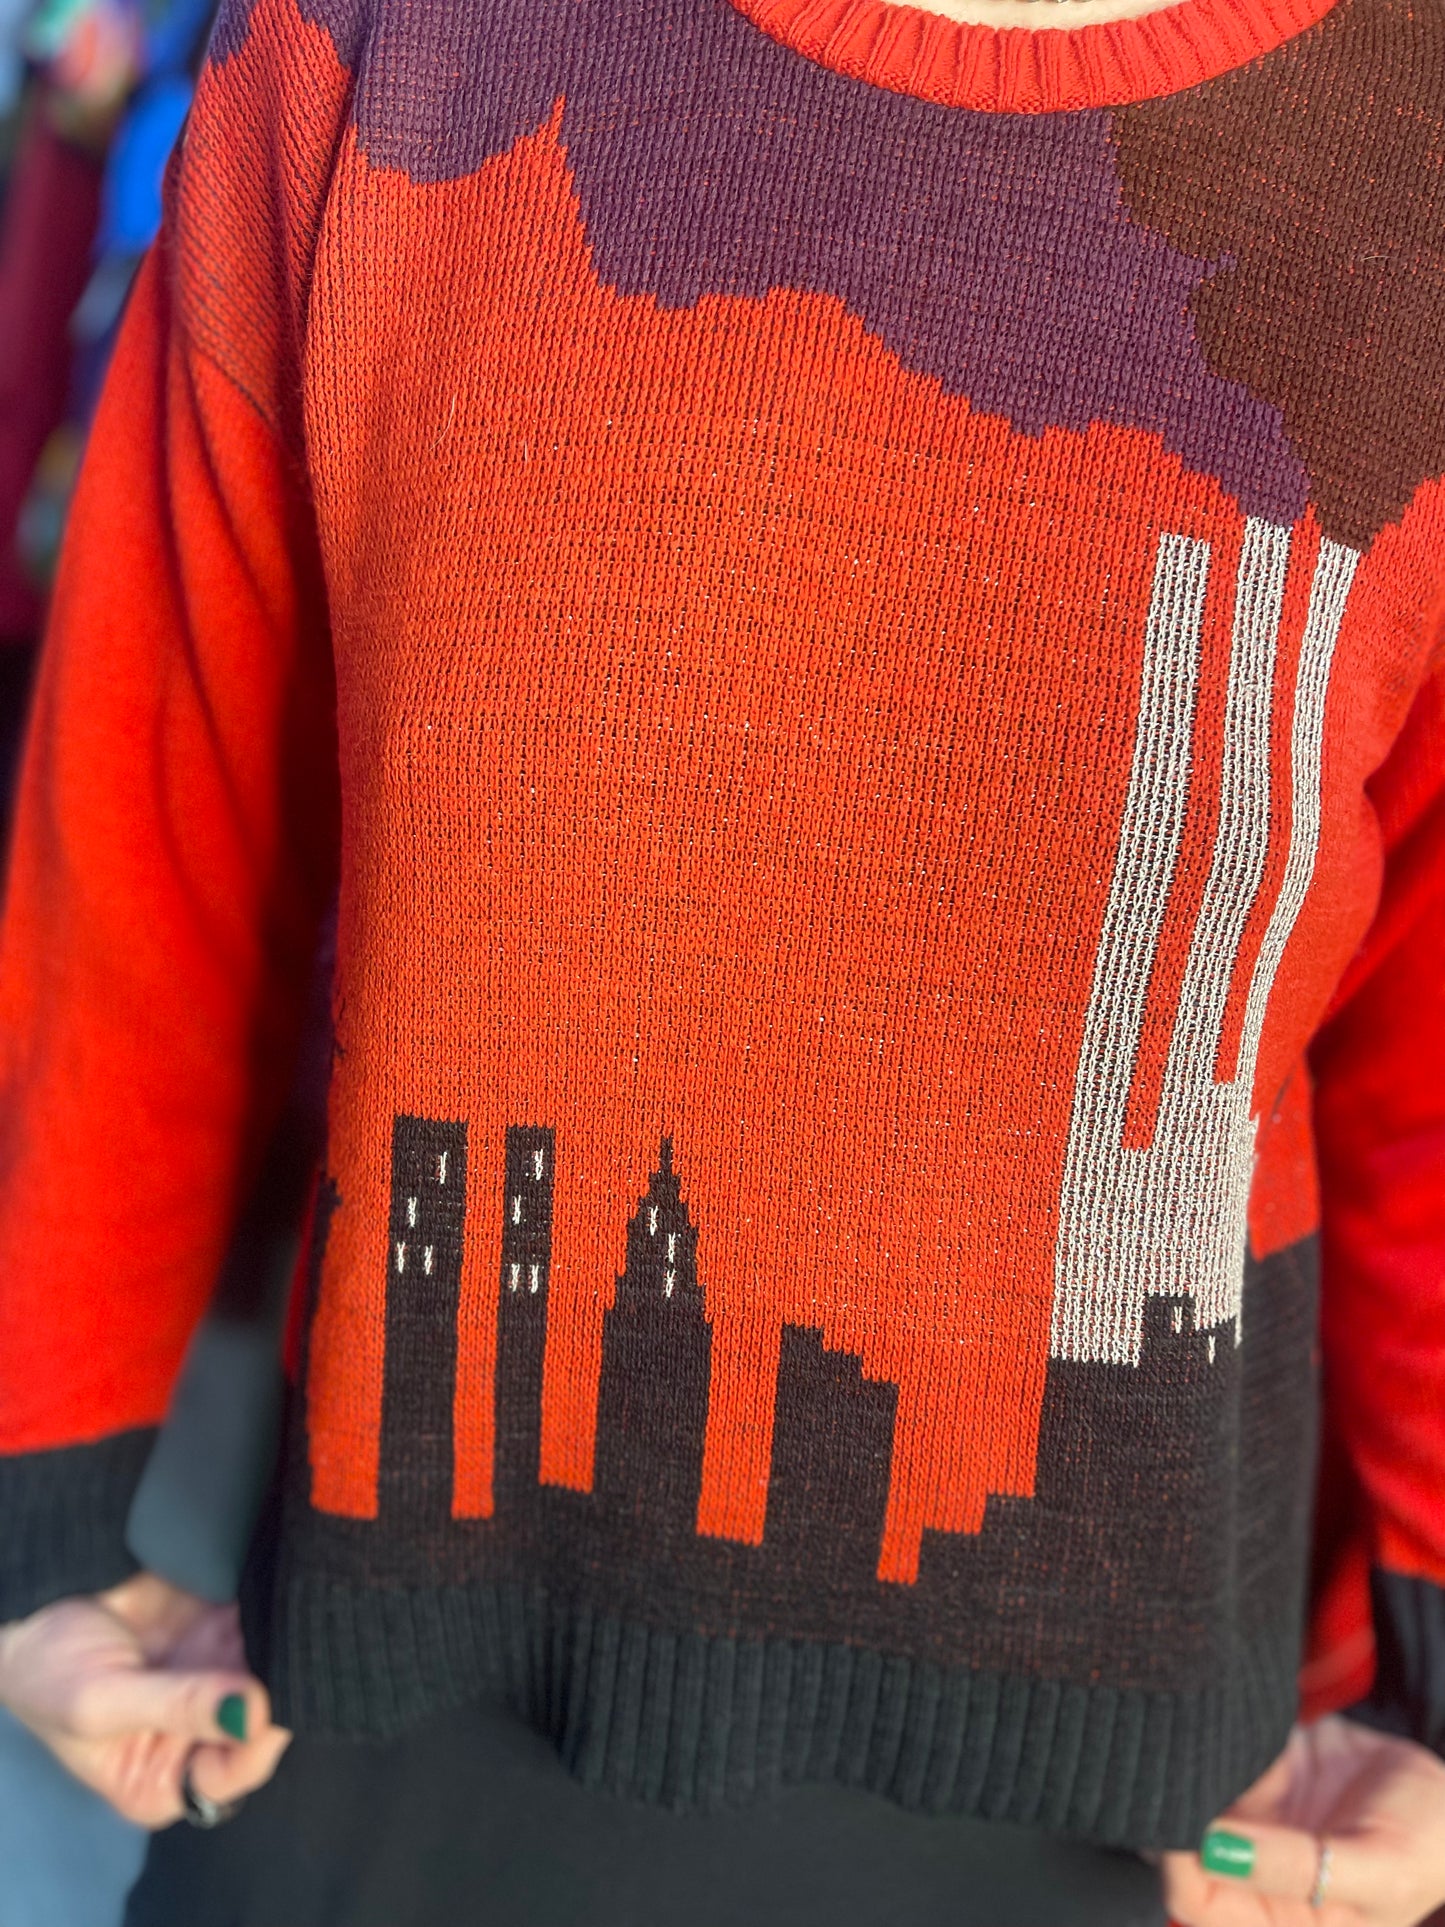 Vintage 80s New York Skyline Sweater